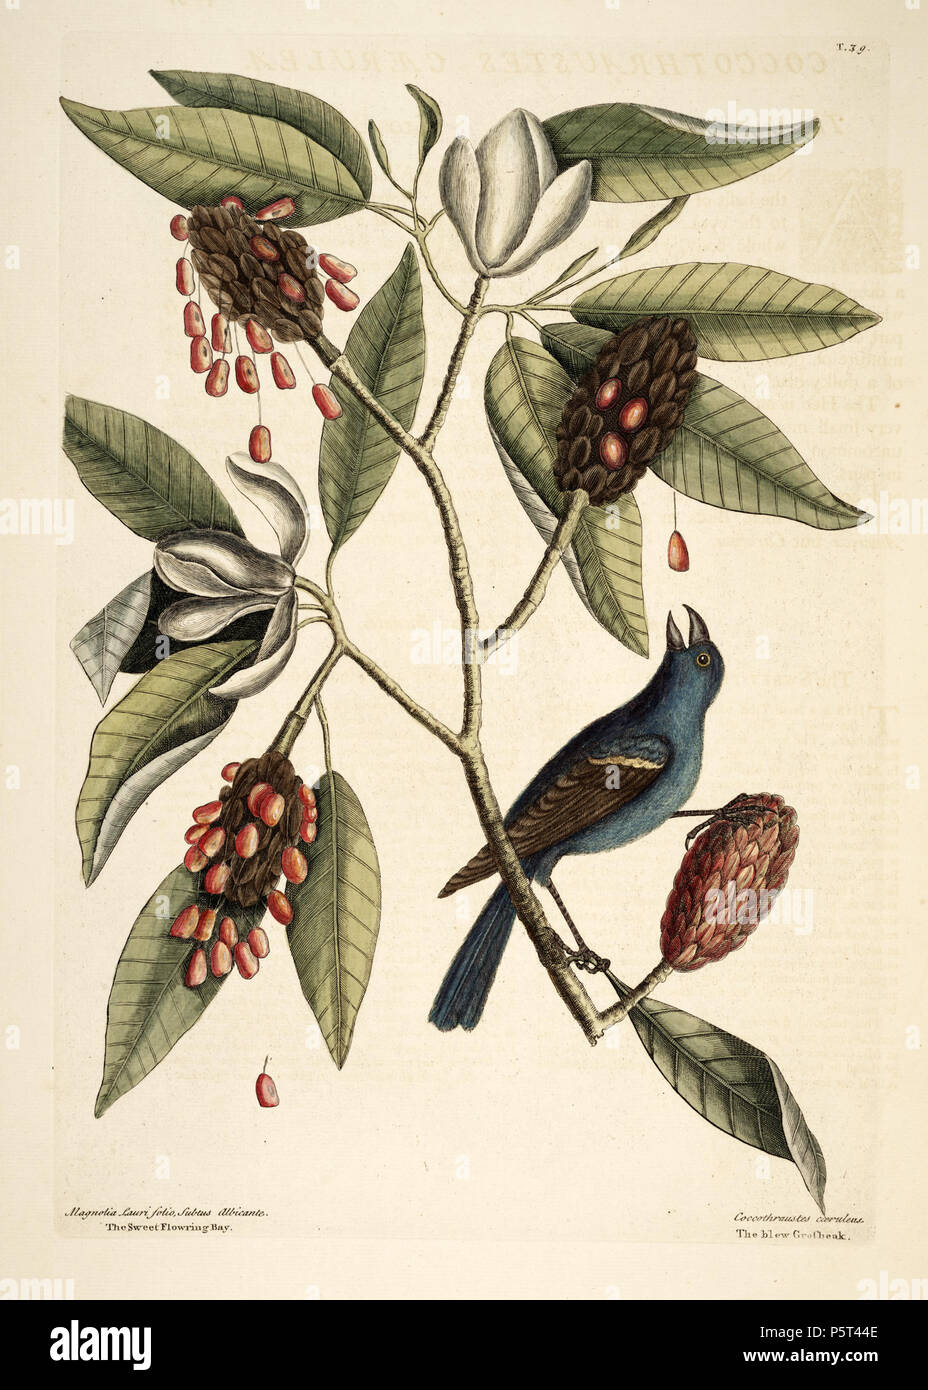 N/A. English: Mark Catesby (1730), Natural History of Carolina etc., plate 39, with Magnolia lauri folio, subtus albicante, the Sweet Bay (Magnolia virginiana) and Coccothraustes coeruleus ('caerulea' in the accompanying text), the Blue Grosbeak (Passerina caerulea). Nederlands: Mark Catesby (1730), Natural History of Carolina etc., plaat 39, met Magnolia lauri folio, subtus albicante (Magnolia virginiana) en Coccothraustes coeruleus ('caerulea' in de bijbehorende tekst), de blauwe bisschop (Passerina caerulea). Deutsch: Mark Catesby (1730), Natural History of Carolina etc., Tafel 39, mit Magn Stock Photo